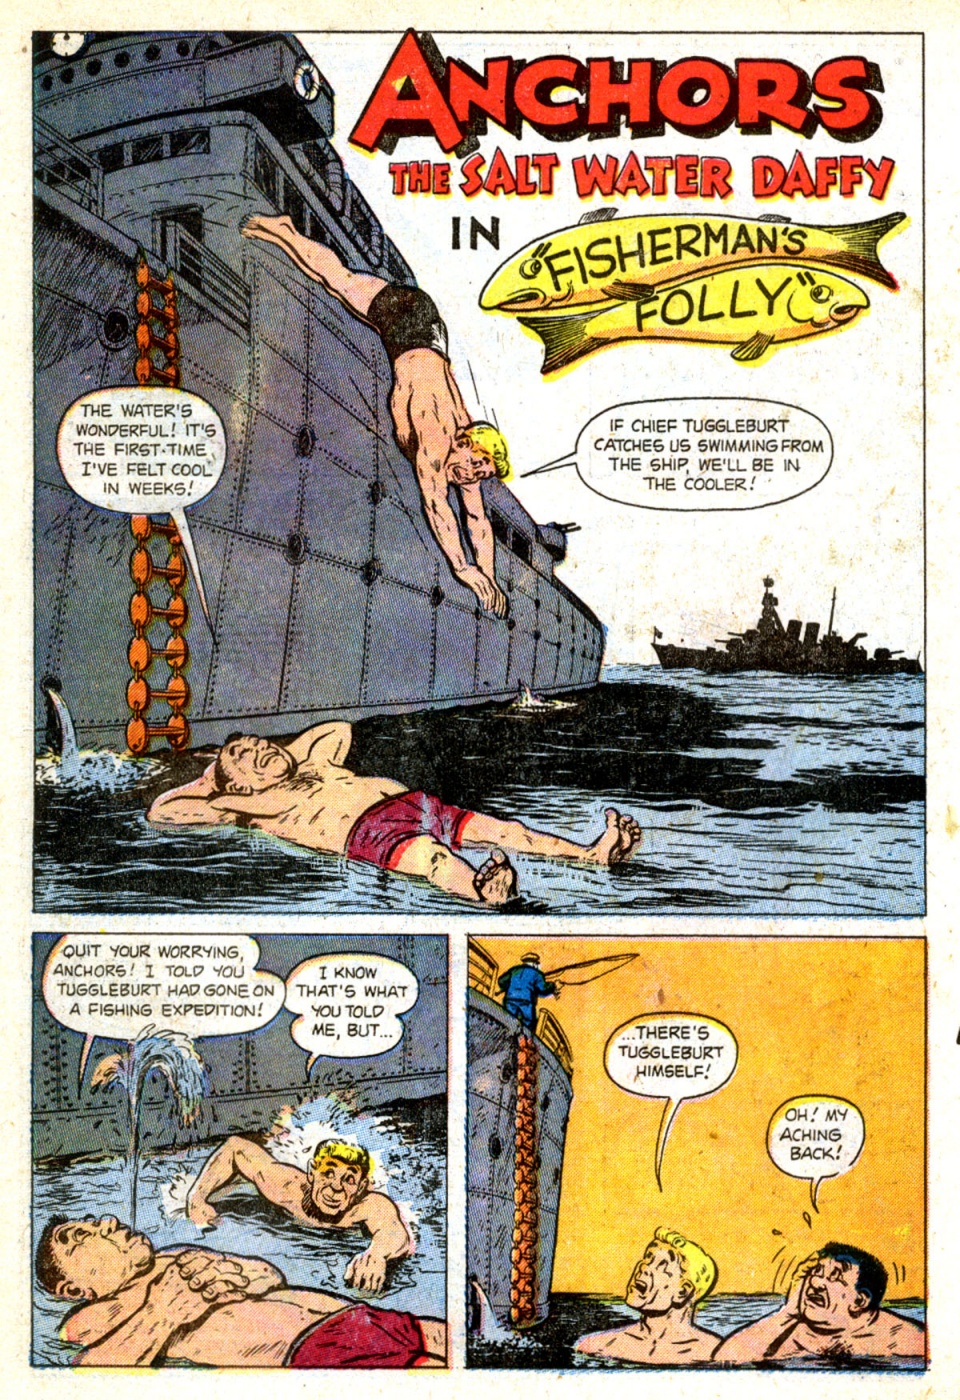 Anchors the Salt Water Daffy - Comics (b) (21)